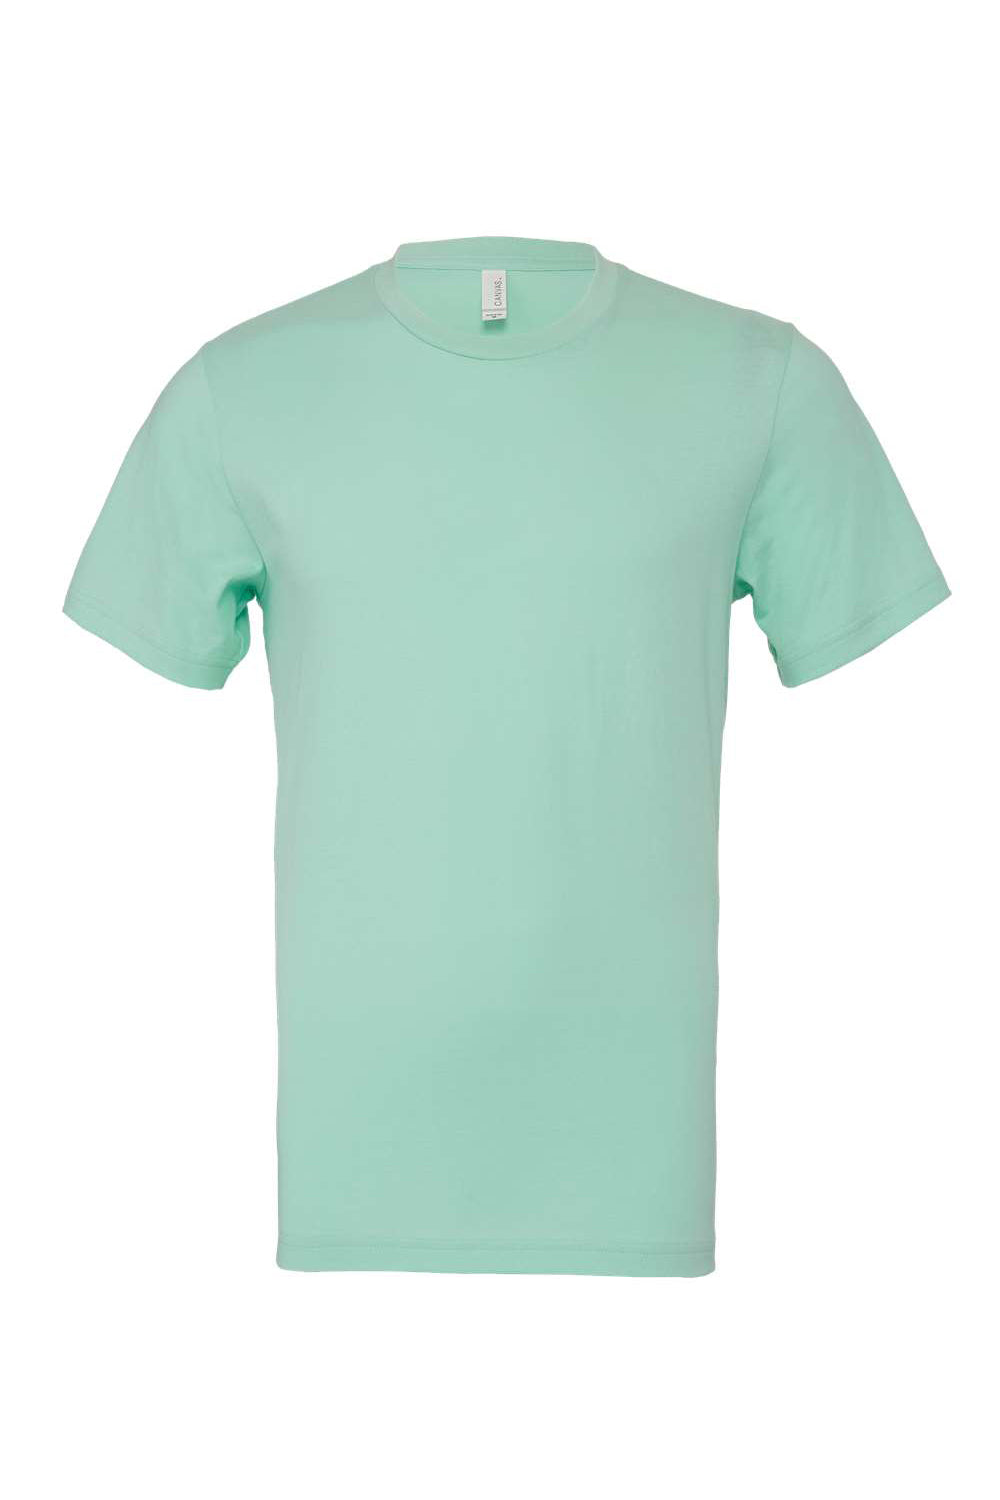 Bella + Canvas BC3001/3001C Mens Jersey Short Sleeve Crewneck T-Shirt Mint Green Flat Front